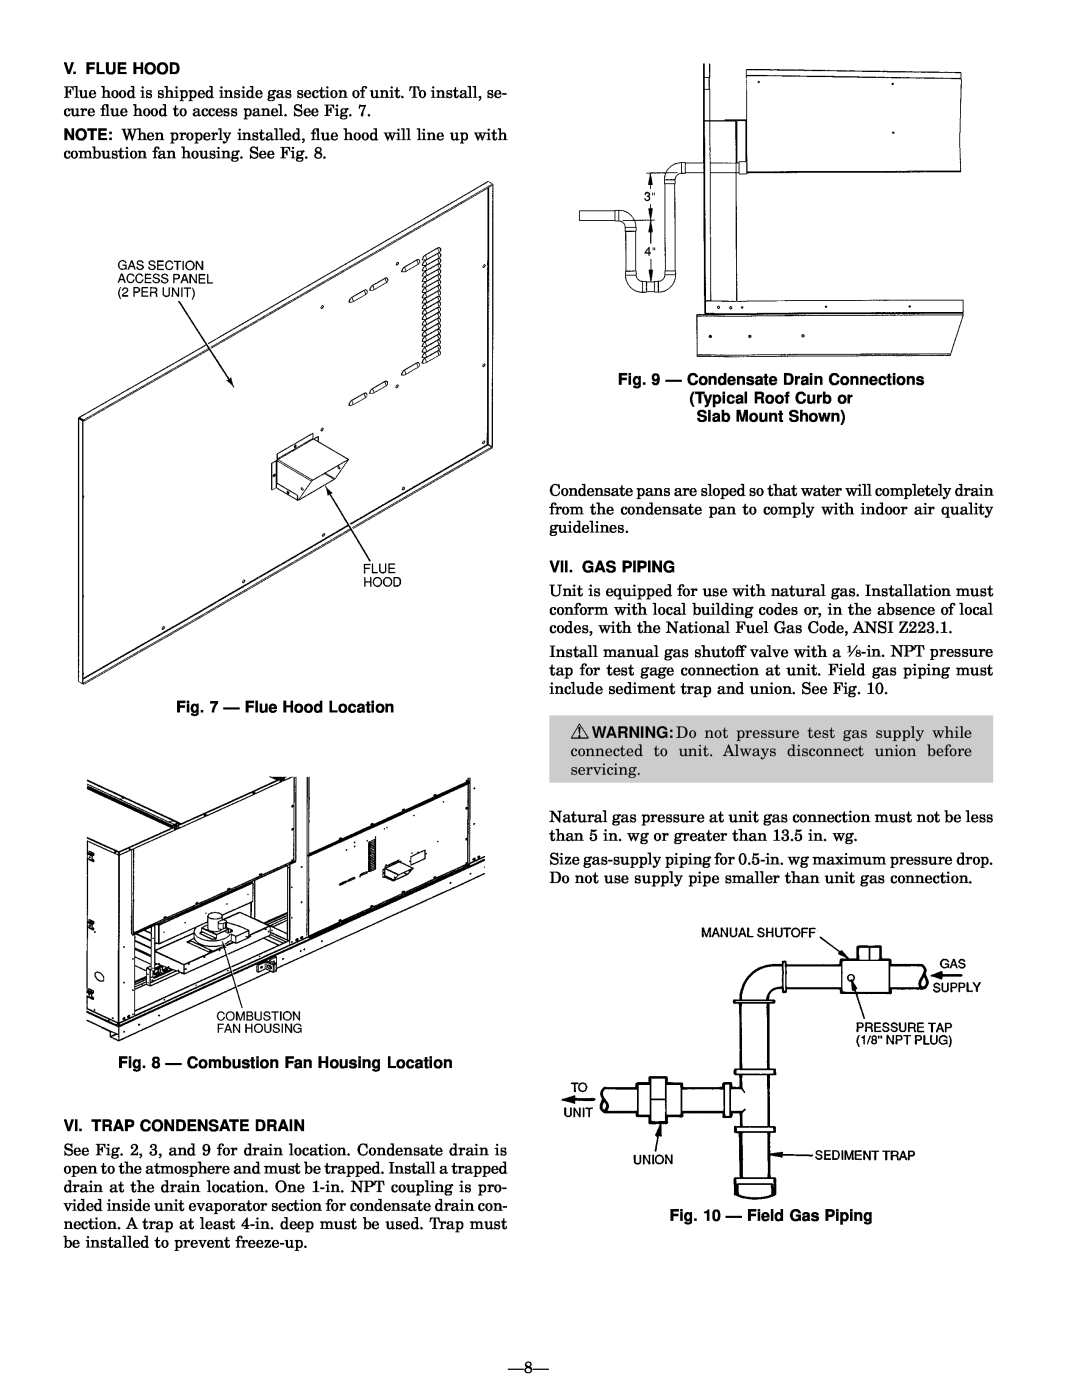 Bryant 580G manual V. Flue Hood, Ð Flue Hood Location, Ð Combustion Fan Housing Location, Vi. Trap Condensate Drain 